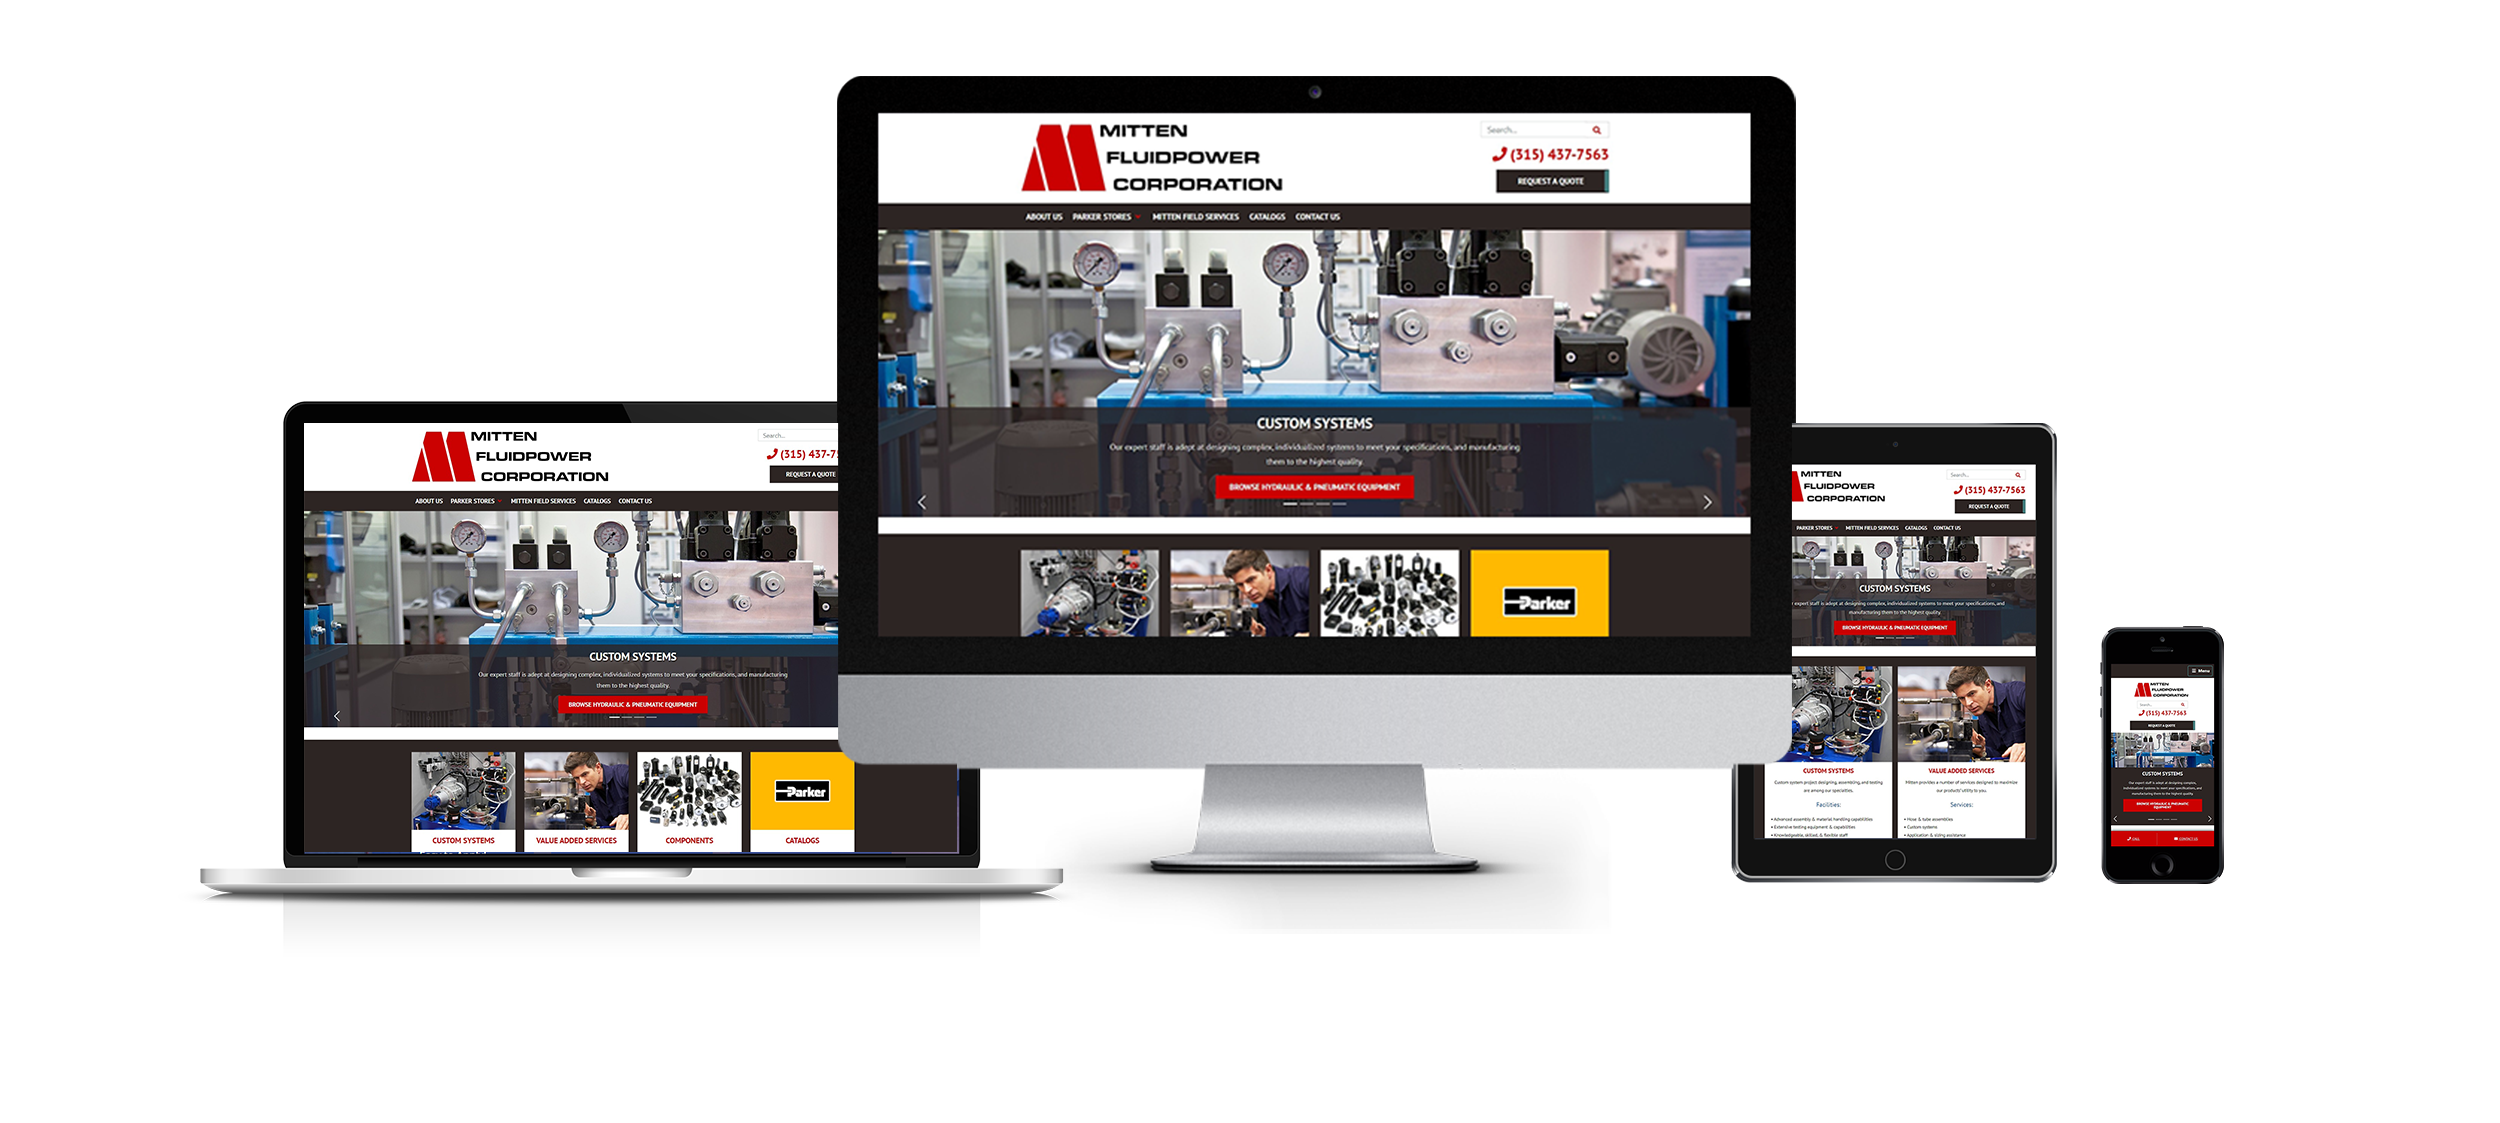 industrial website design responsive web design image of mitten fluidpower website on multiple devices